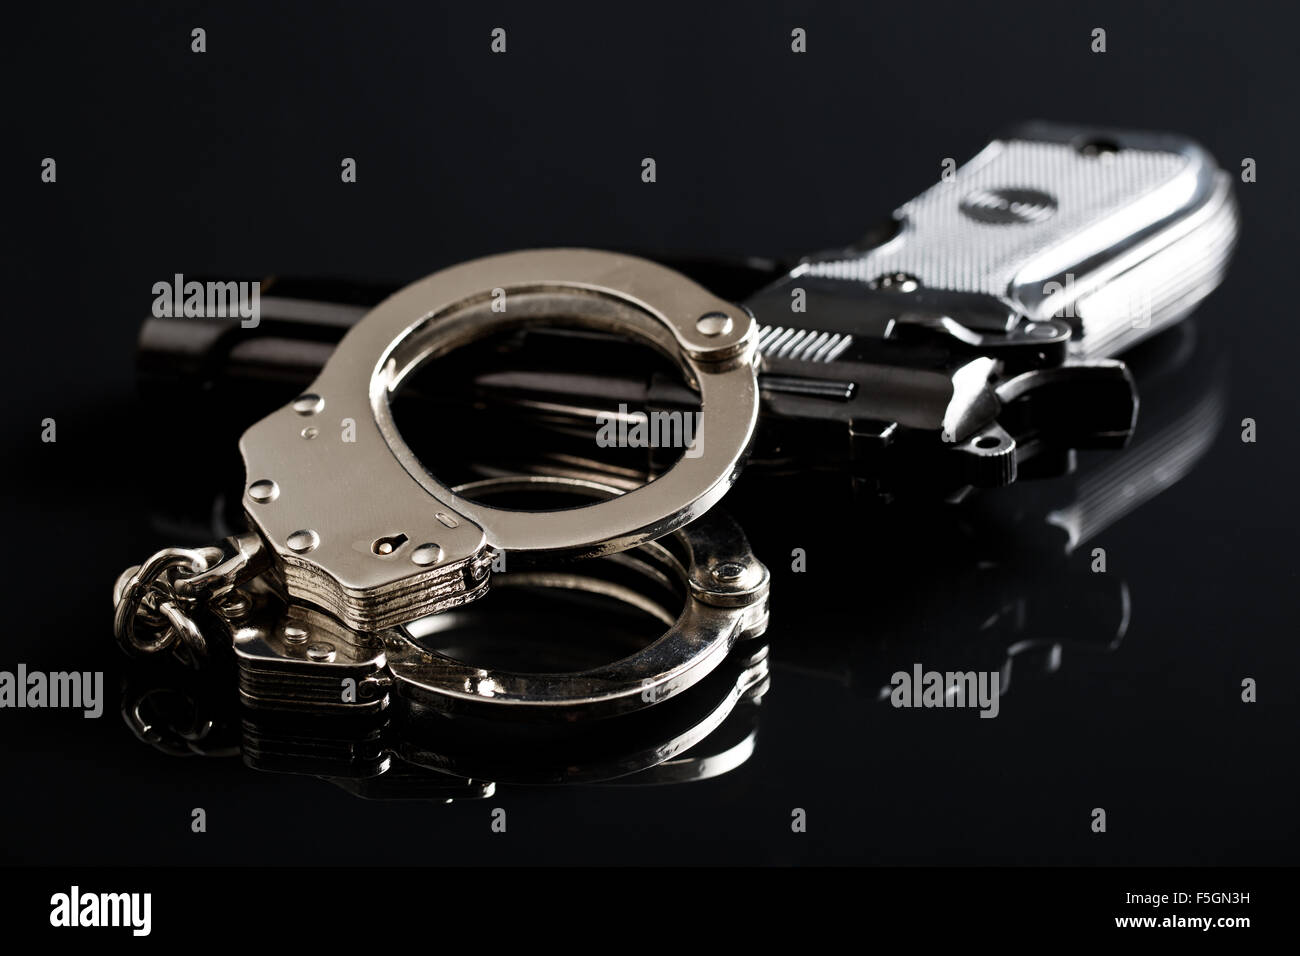 handcuffs and handgun on black background Stock Photo